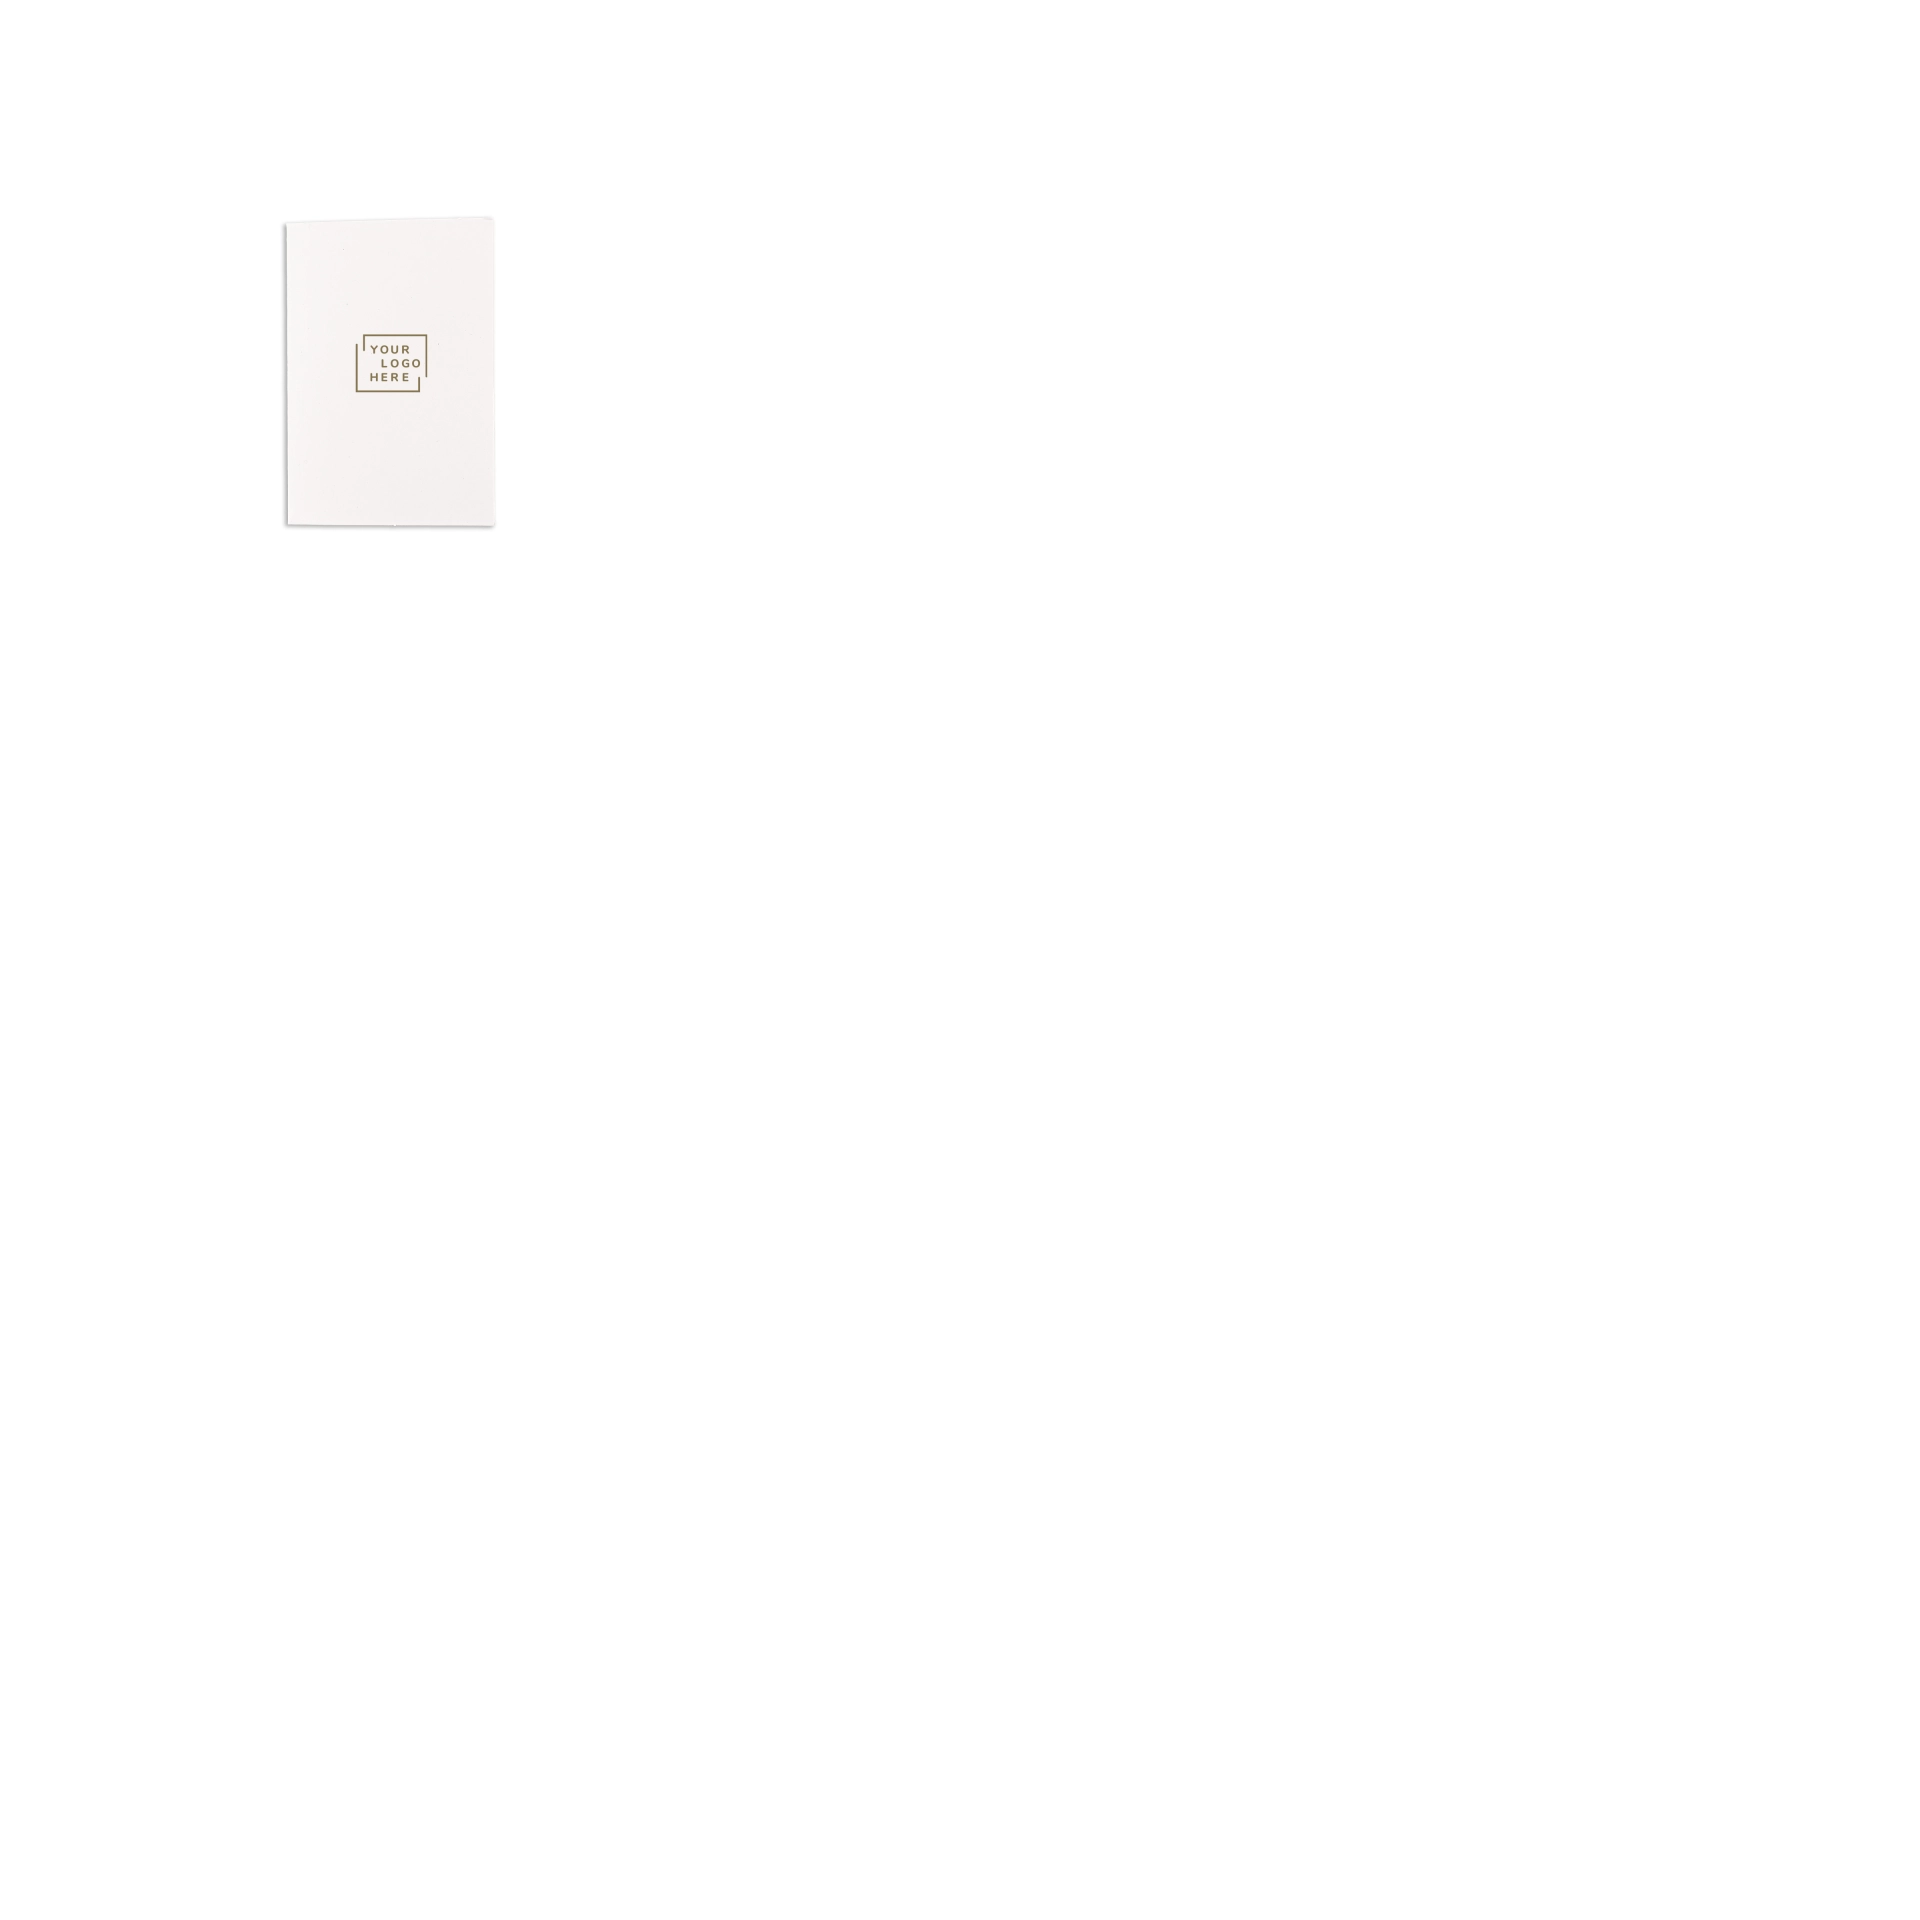 Schlüsseletuikarte | D3 Papier Freelife Wellum white 7,5x10 cm | 260 g/m²  